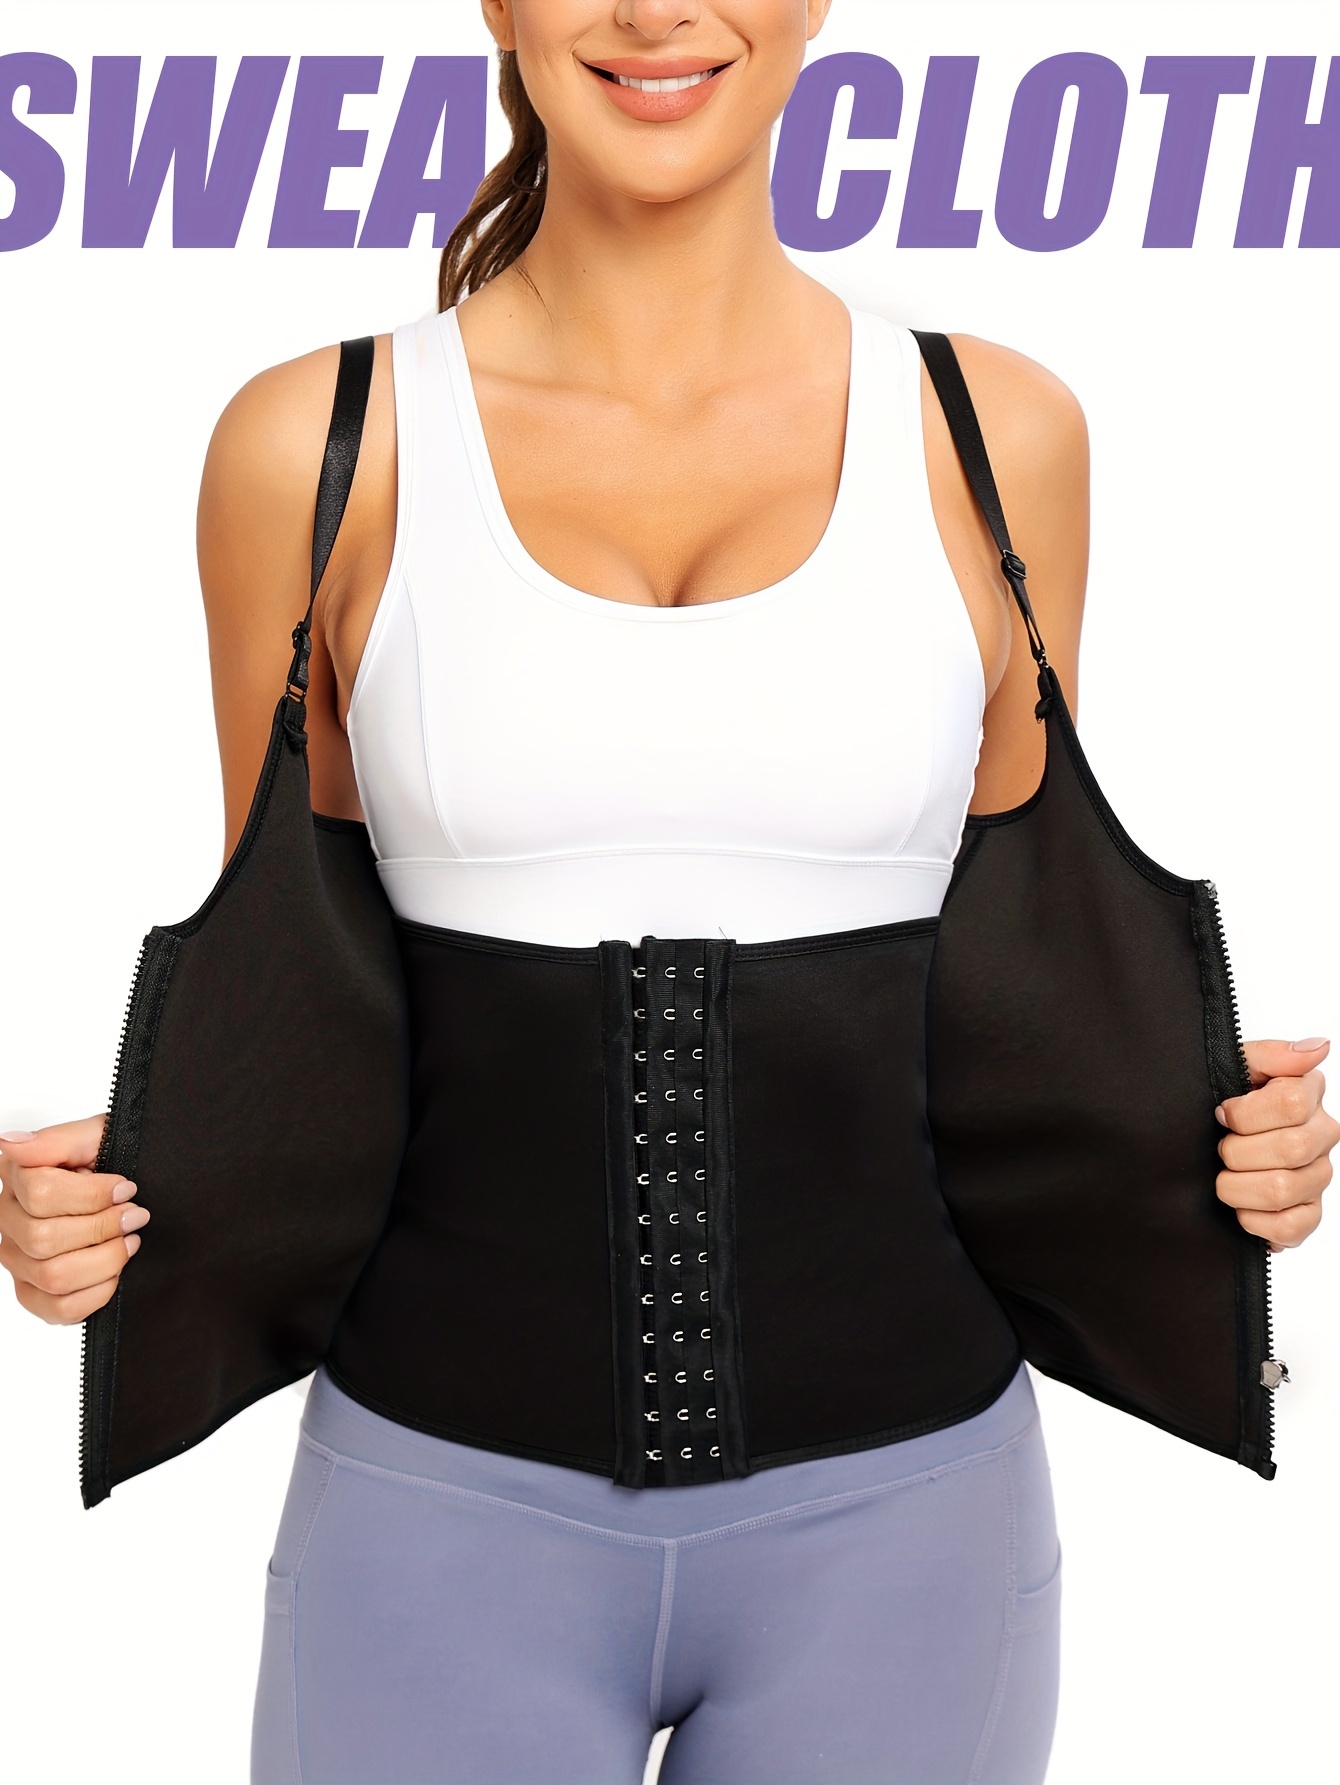  AGILONG Sauna Waist Trainer Vest for Women Weight